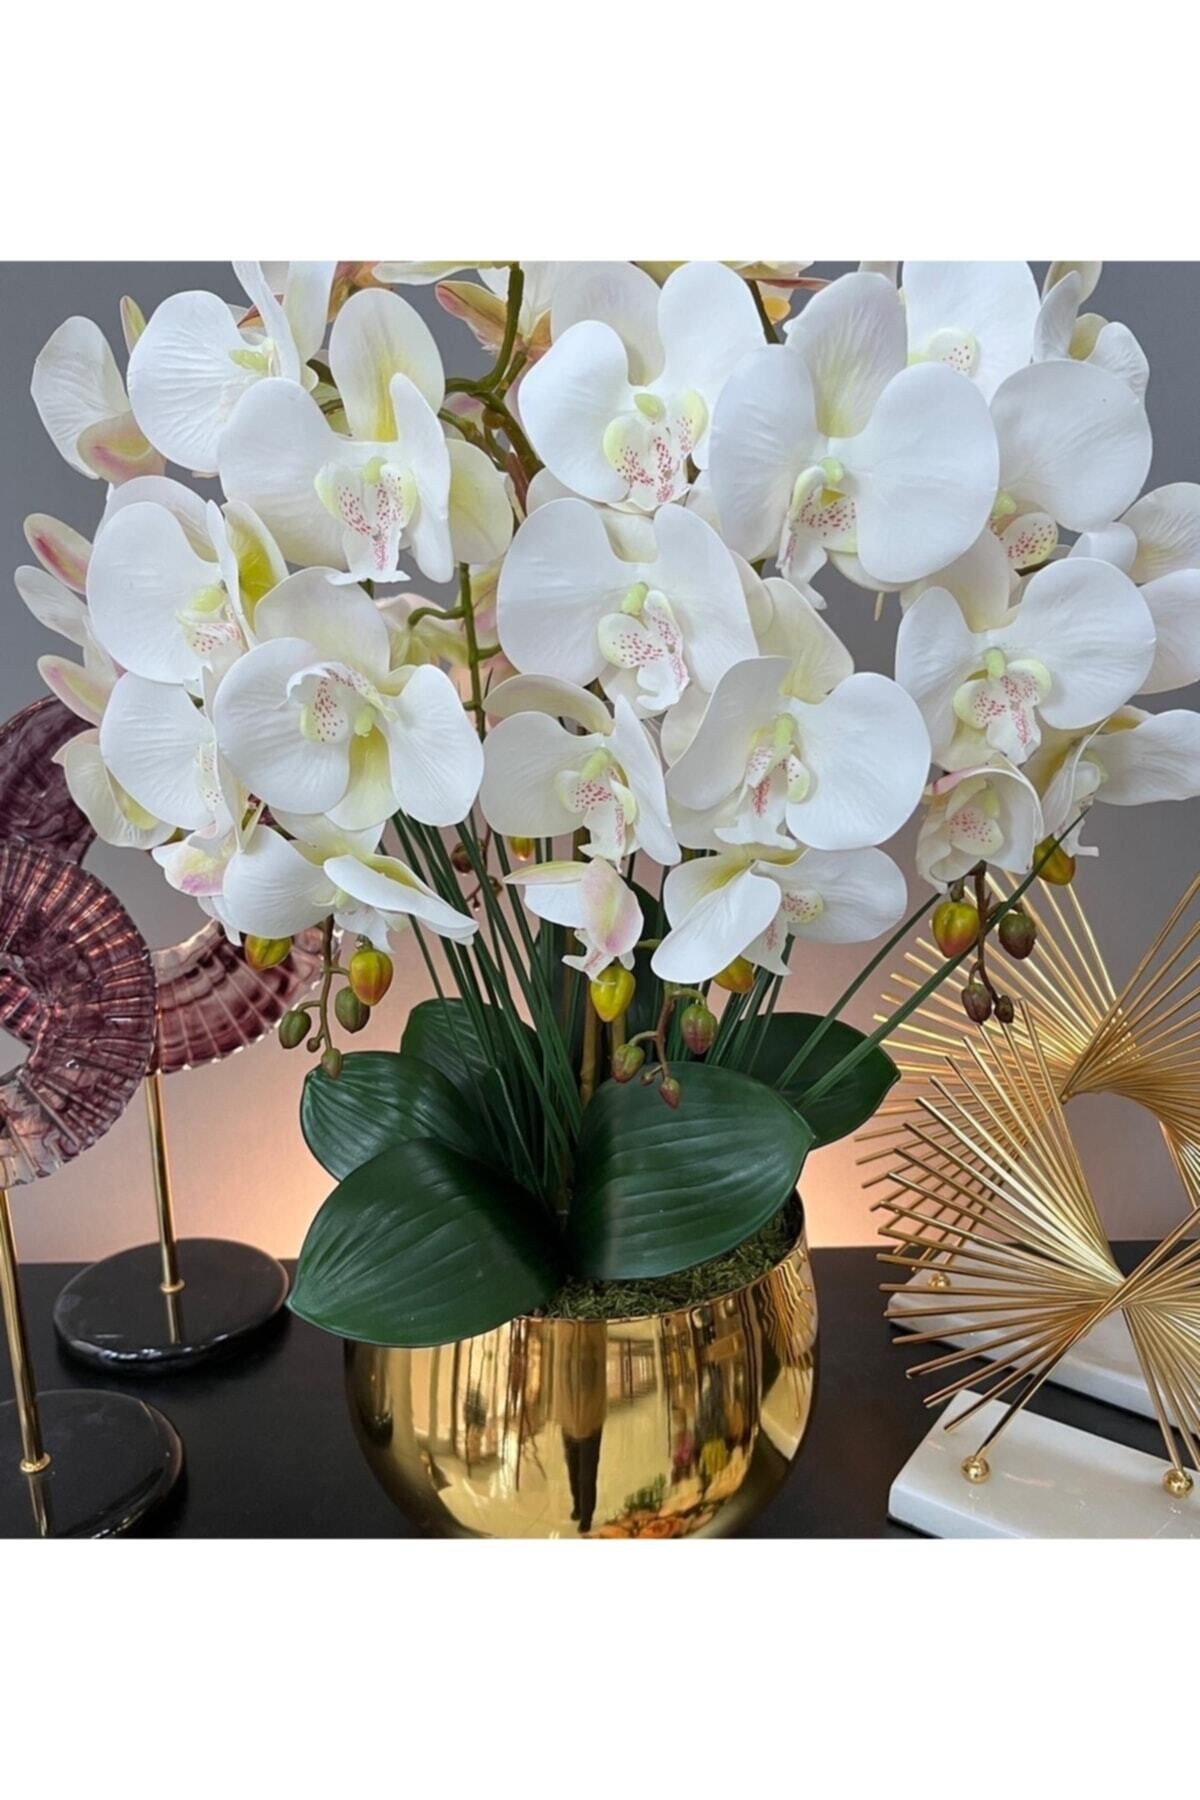 LİLOTEHOME Yapay Orkide Aranjman 6 Dal Beyaz Islak Japon Saksı Parlak Gold